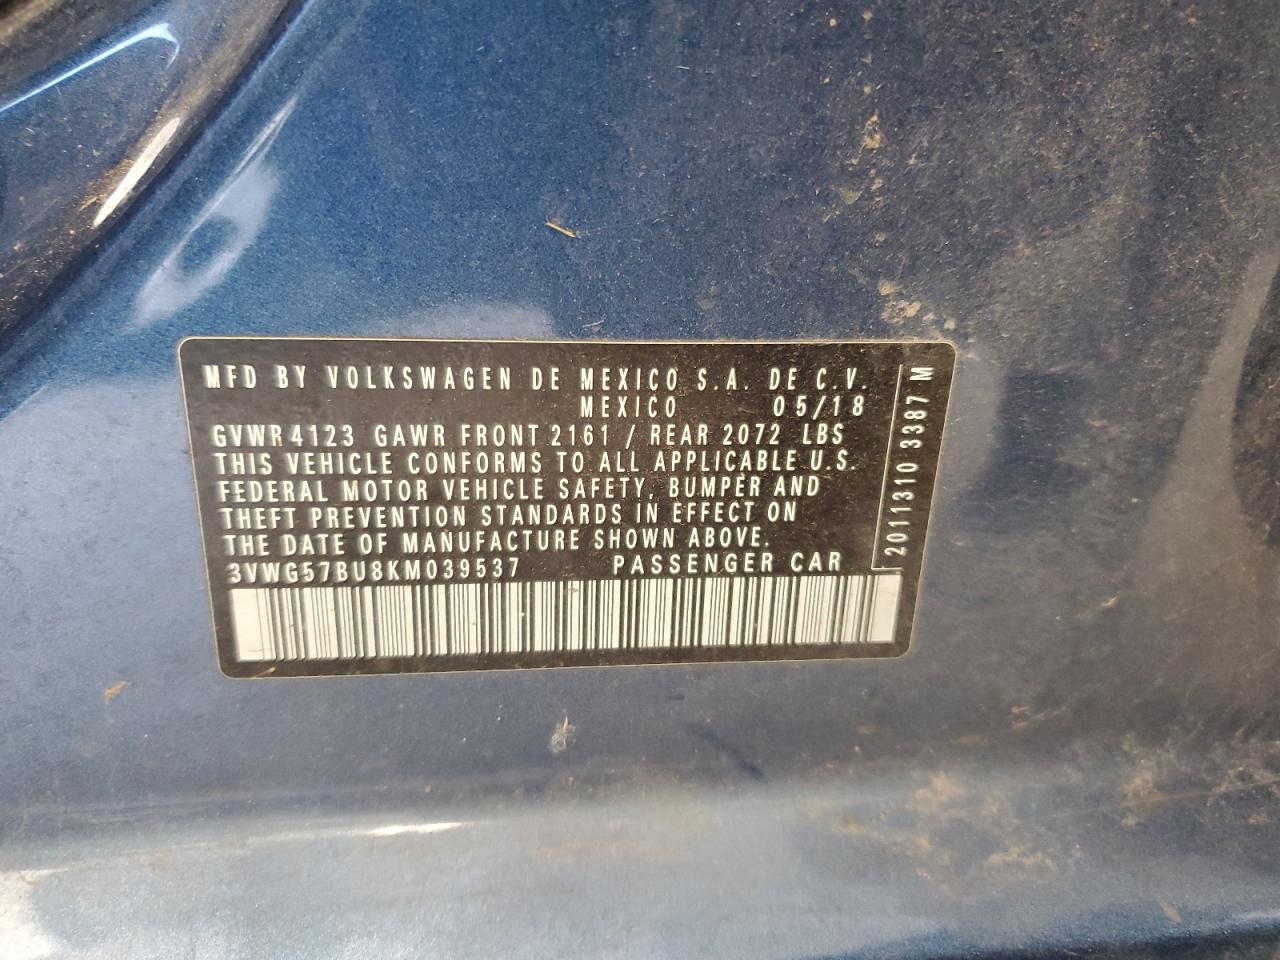 2019 Volkswagen Jetta Sel 1.4L(VIN: 3VWG57BU8KM039537